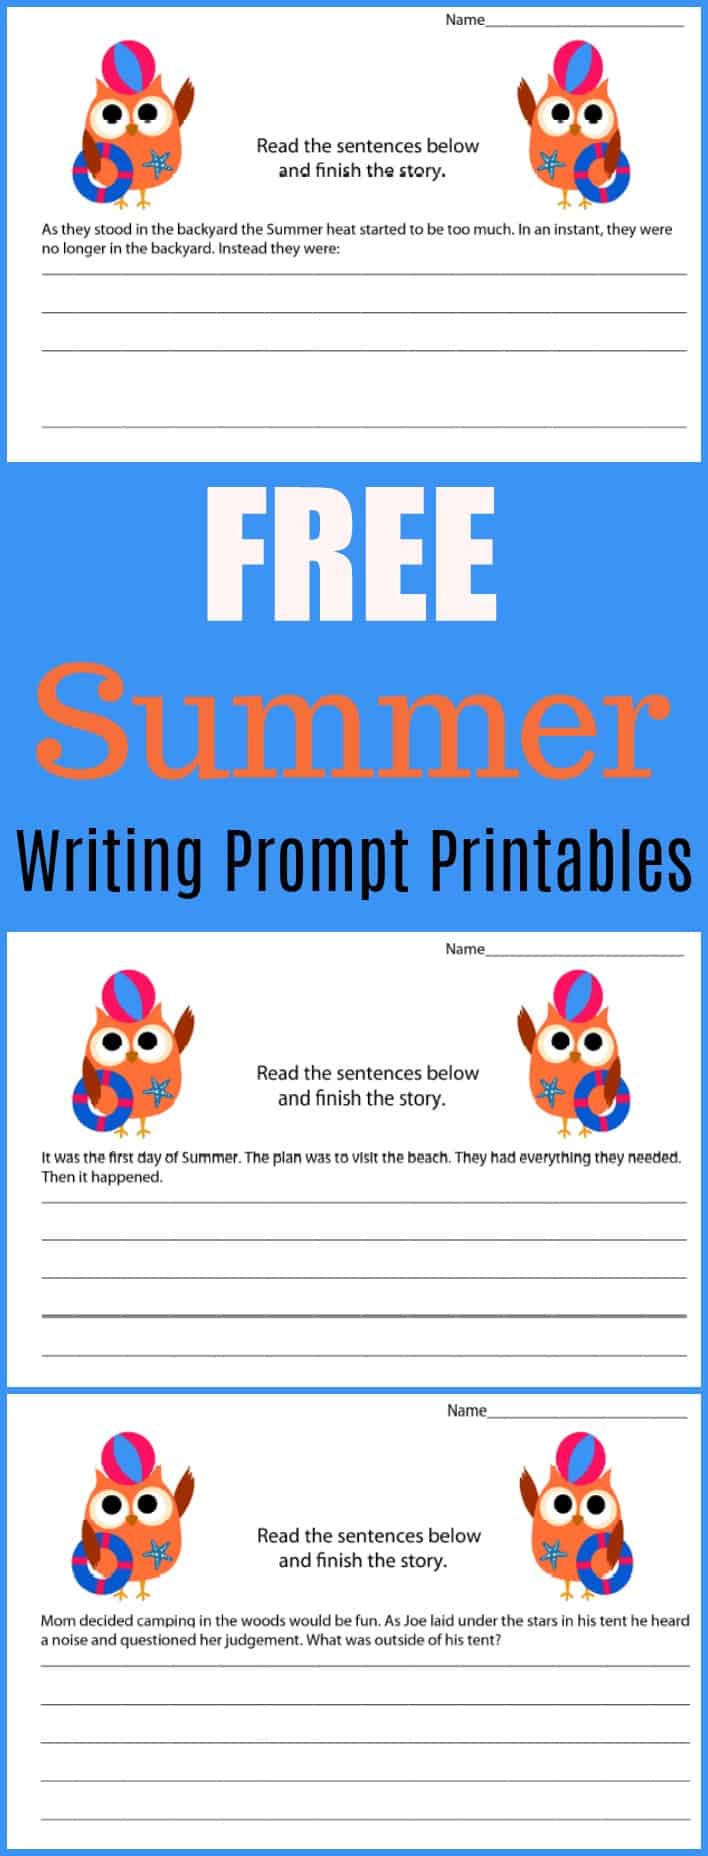 Free Summer Writing Prompt Printable - #writing #writingprompt #holiday #printable #freeprintable #education #edchat #homeschool #homeschooling #summer